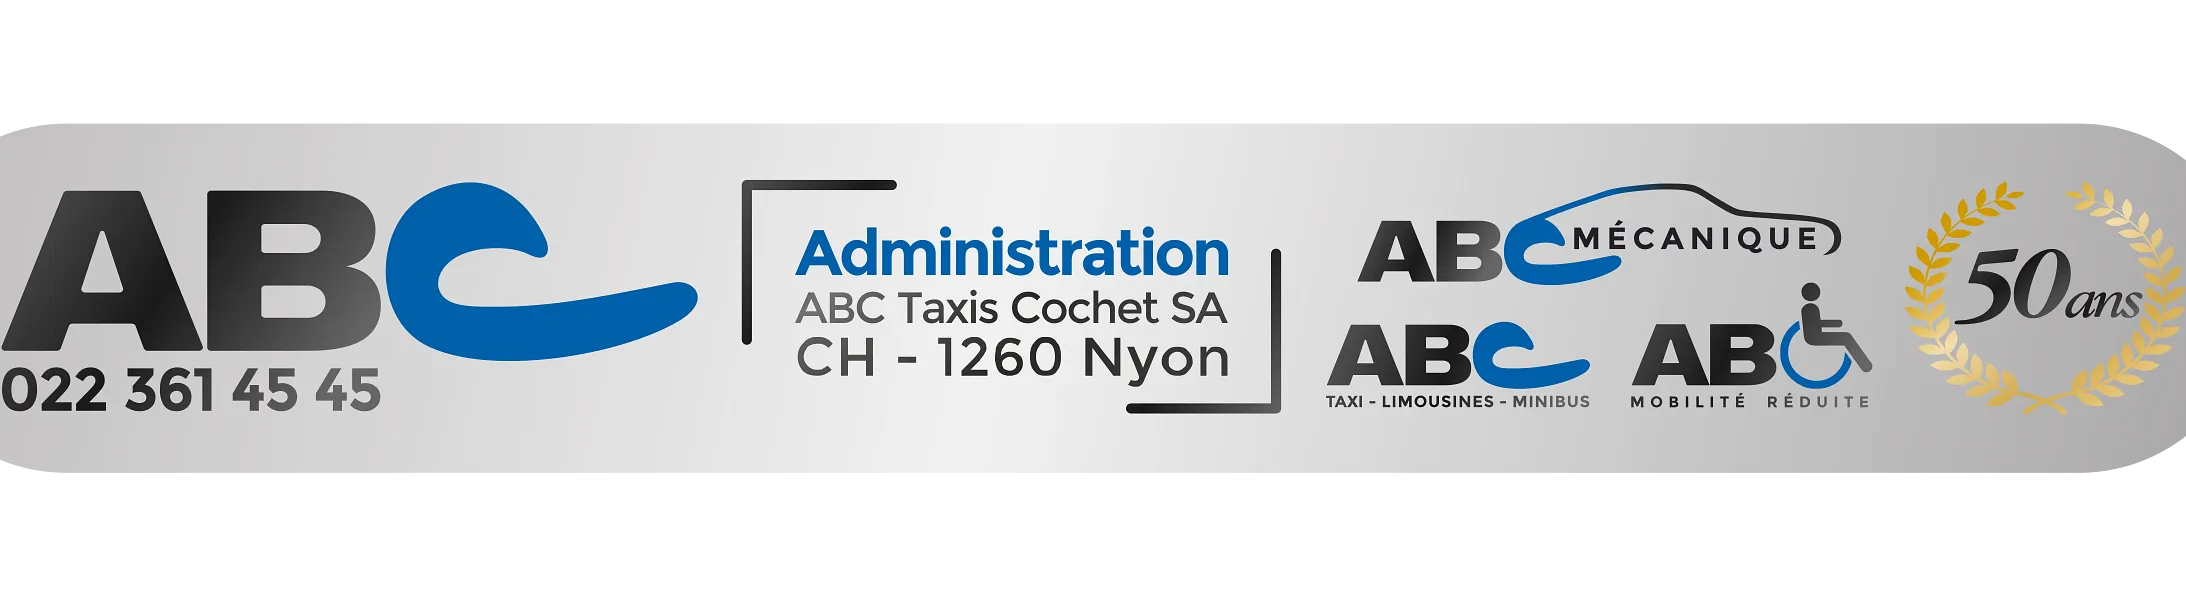 ABC Taxis Cochet SA